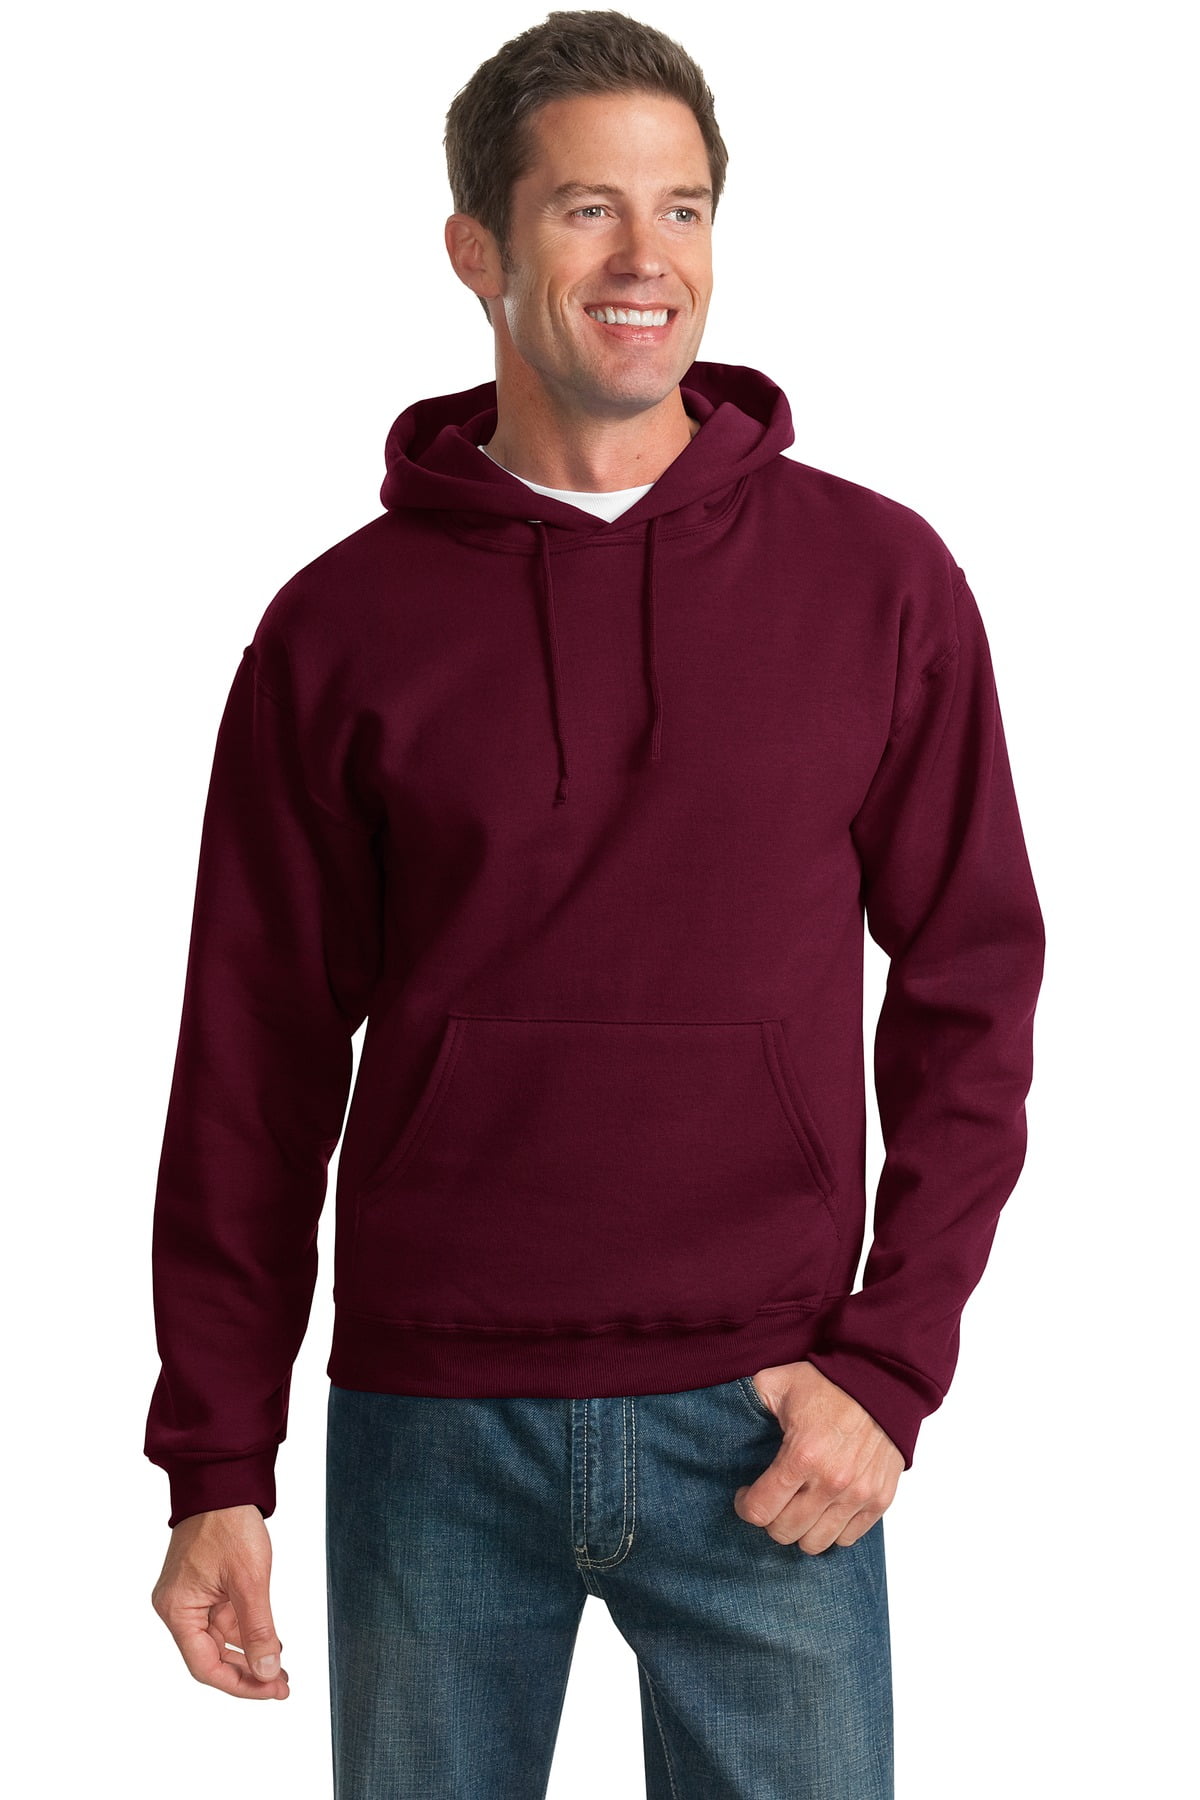 JERZEES - Jerzees Mens NuBlend Pullover Hooded Sweatshirt - Walmart.com ...